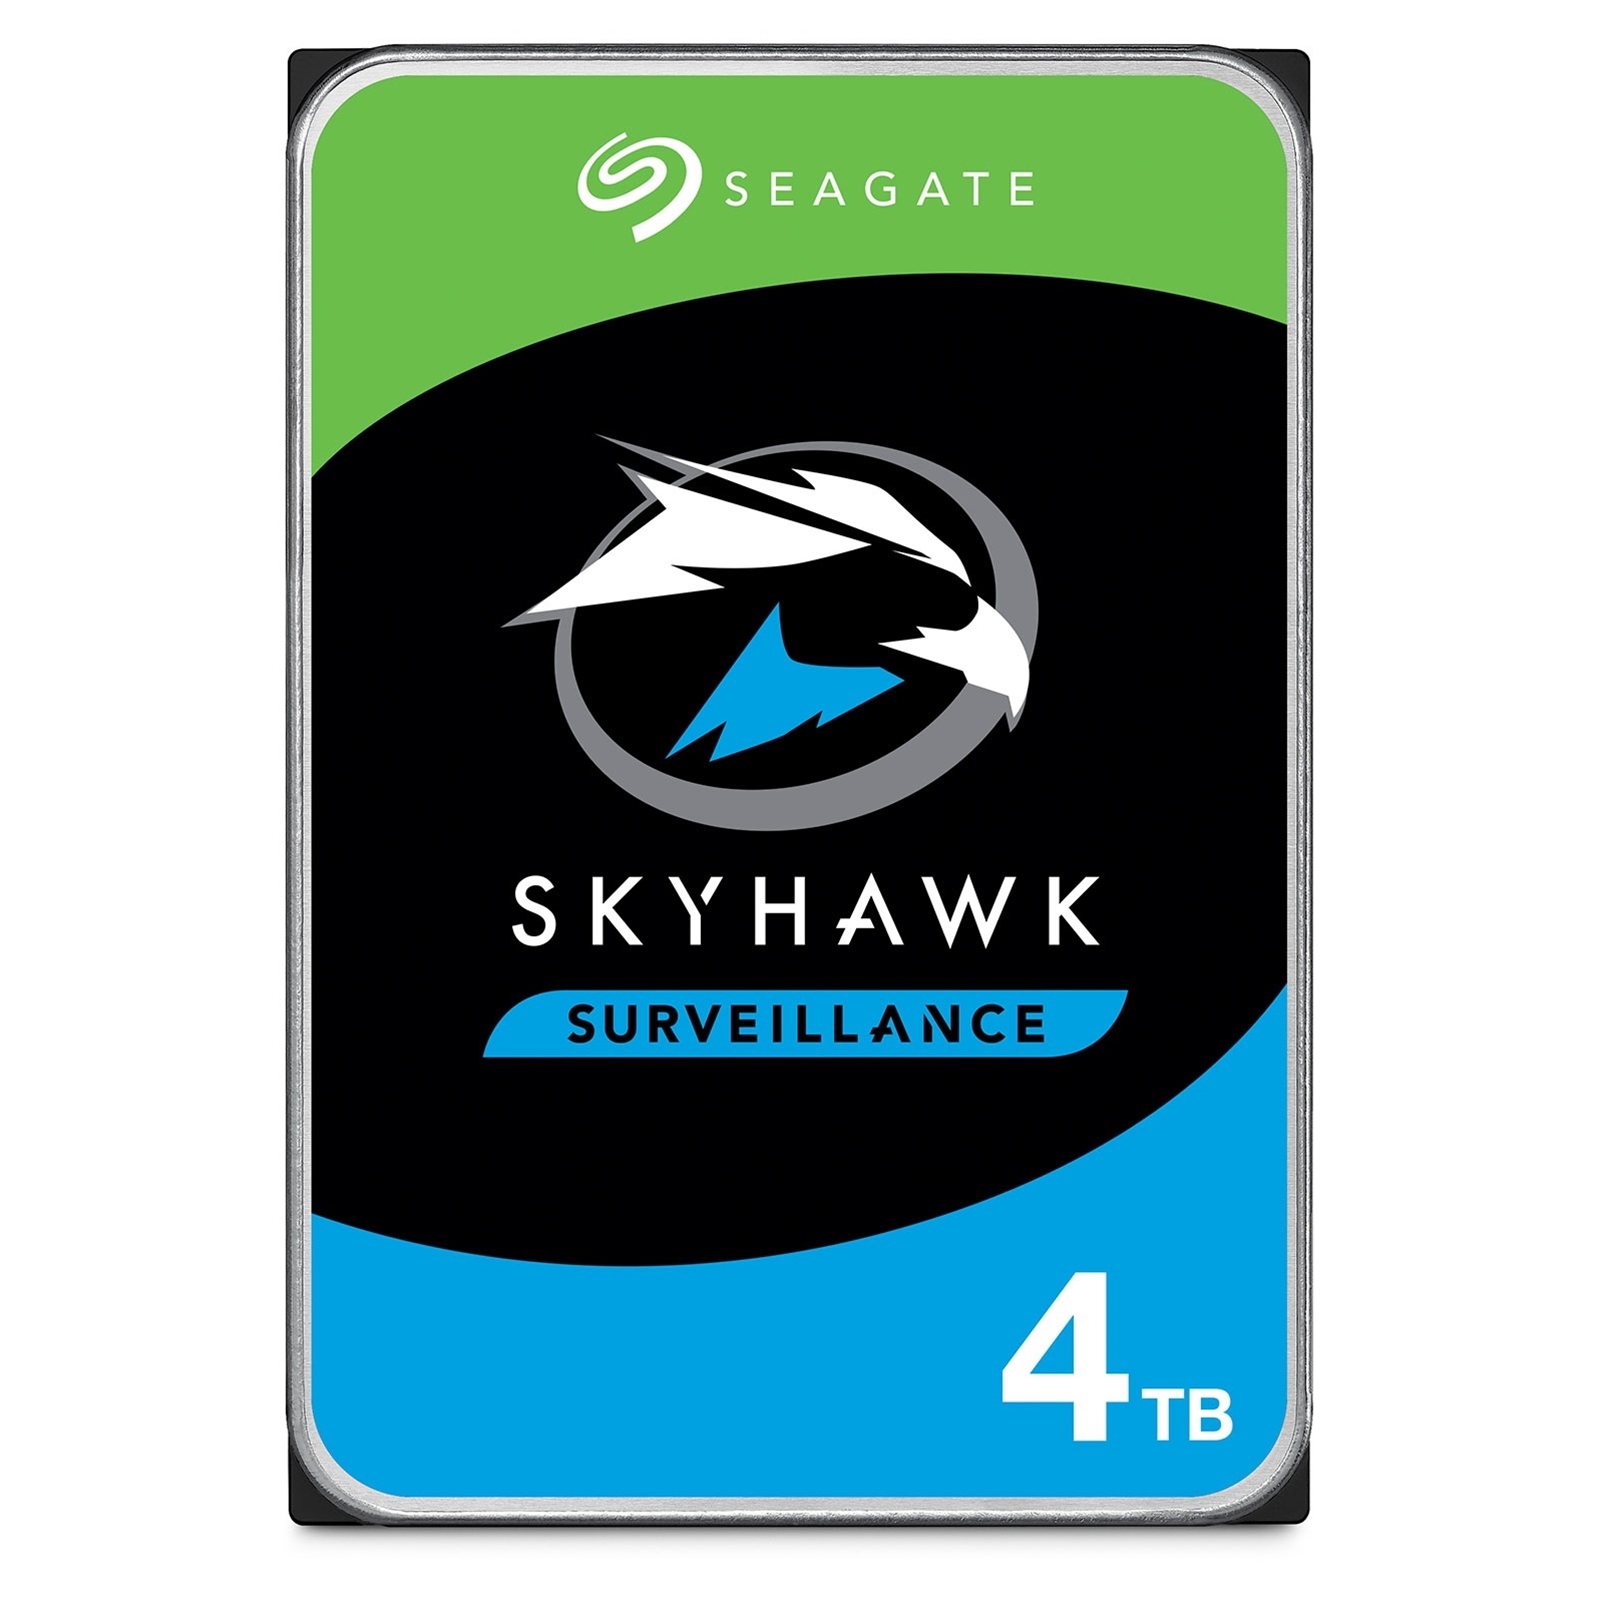 Seagate SkyHawk Surveillance ST4000VX016 4TB 3.5'' 5400RPM 256MB Cache SATA III Internal Hard Drive